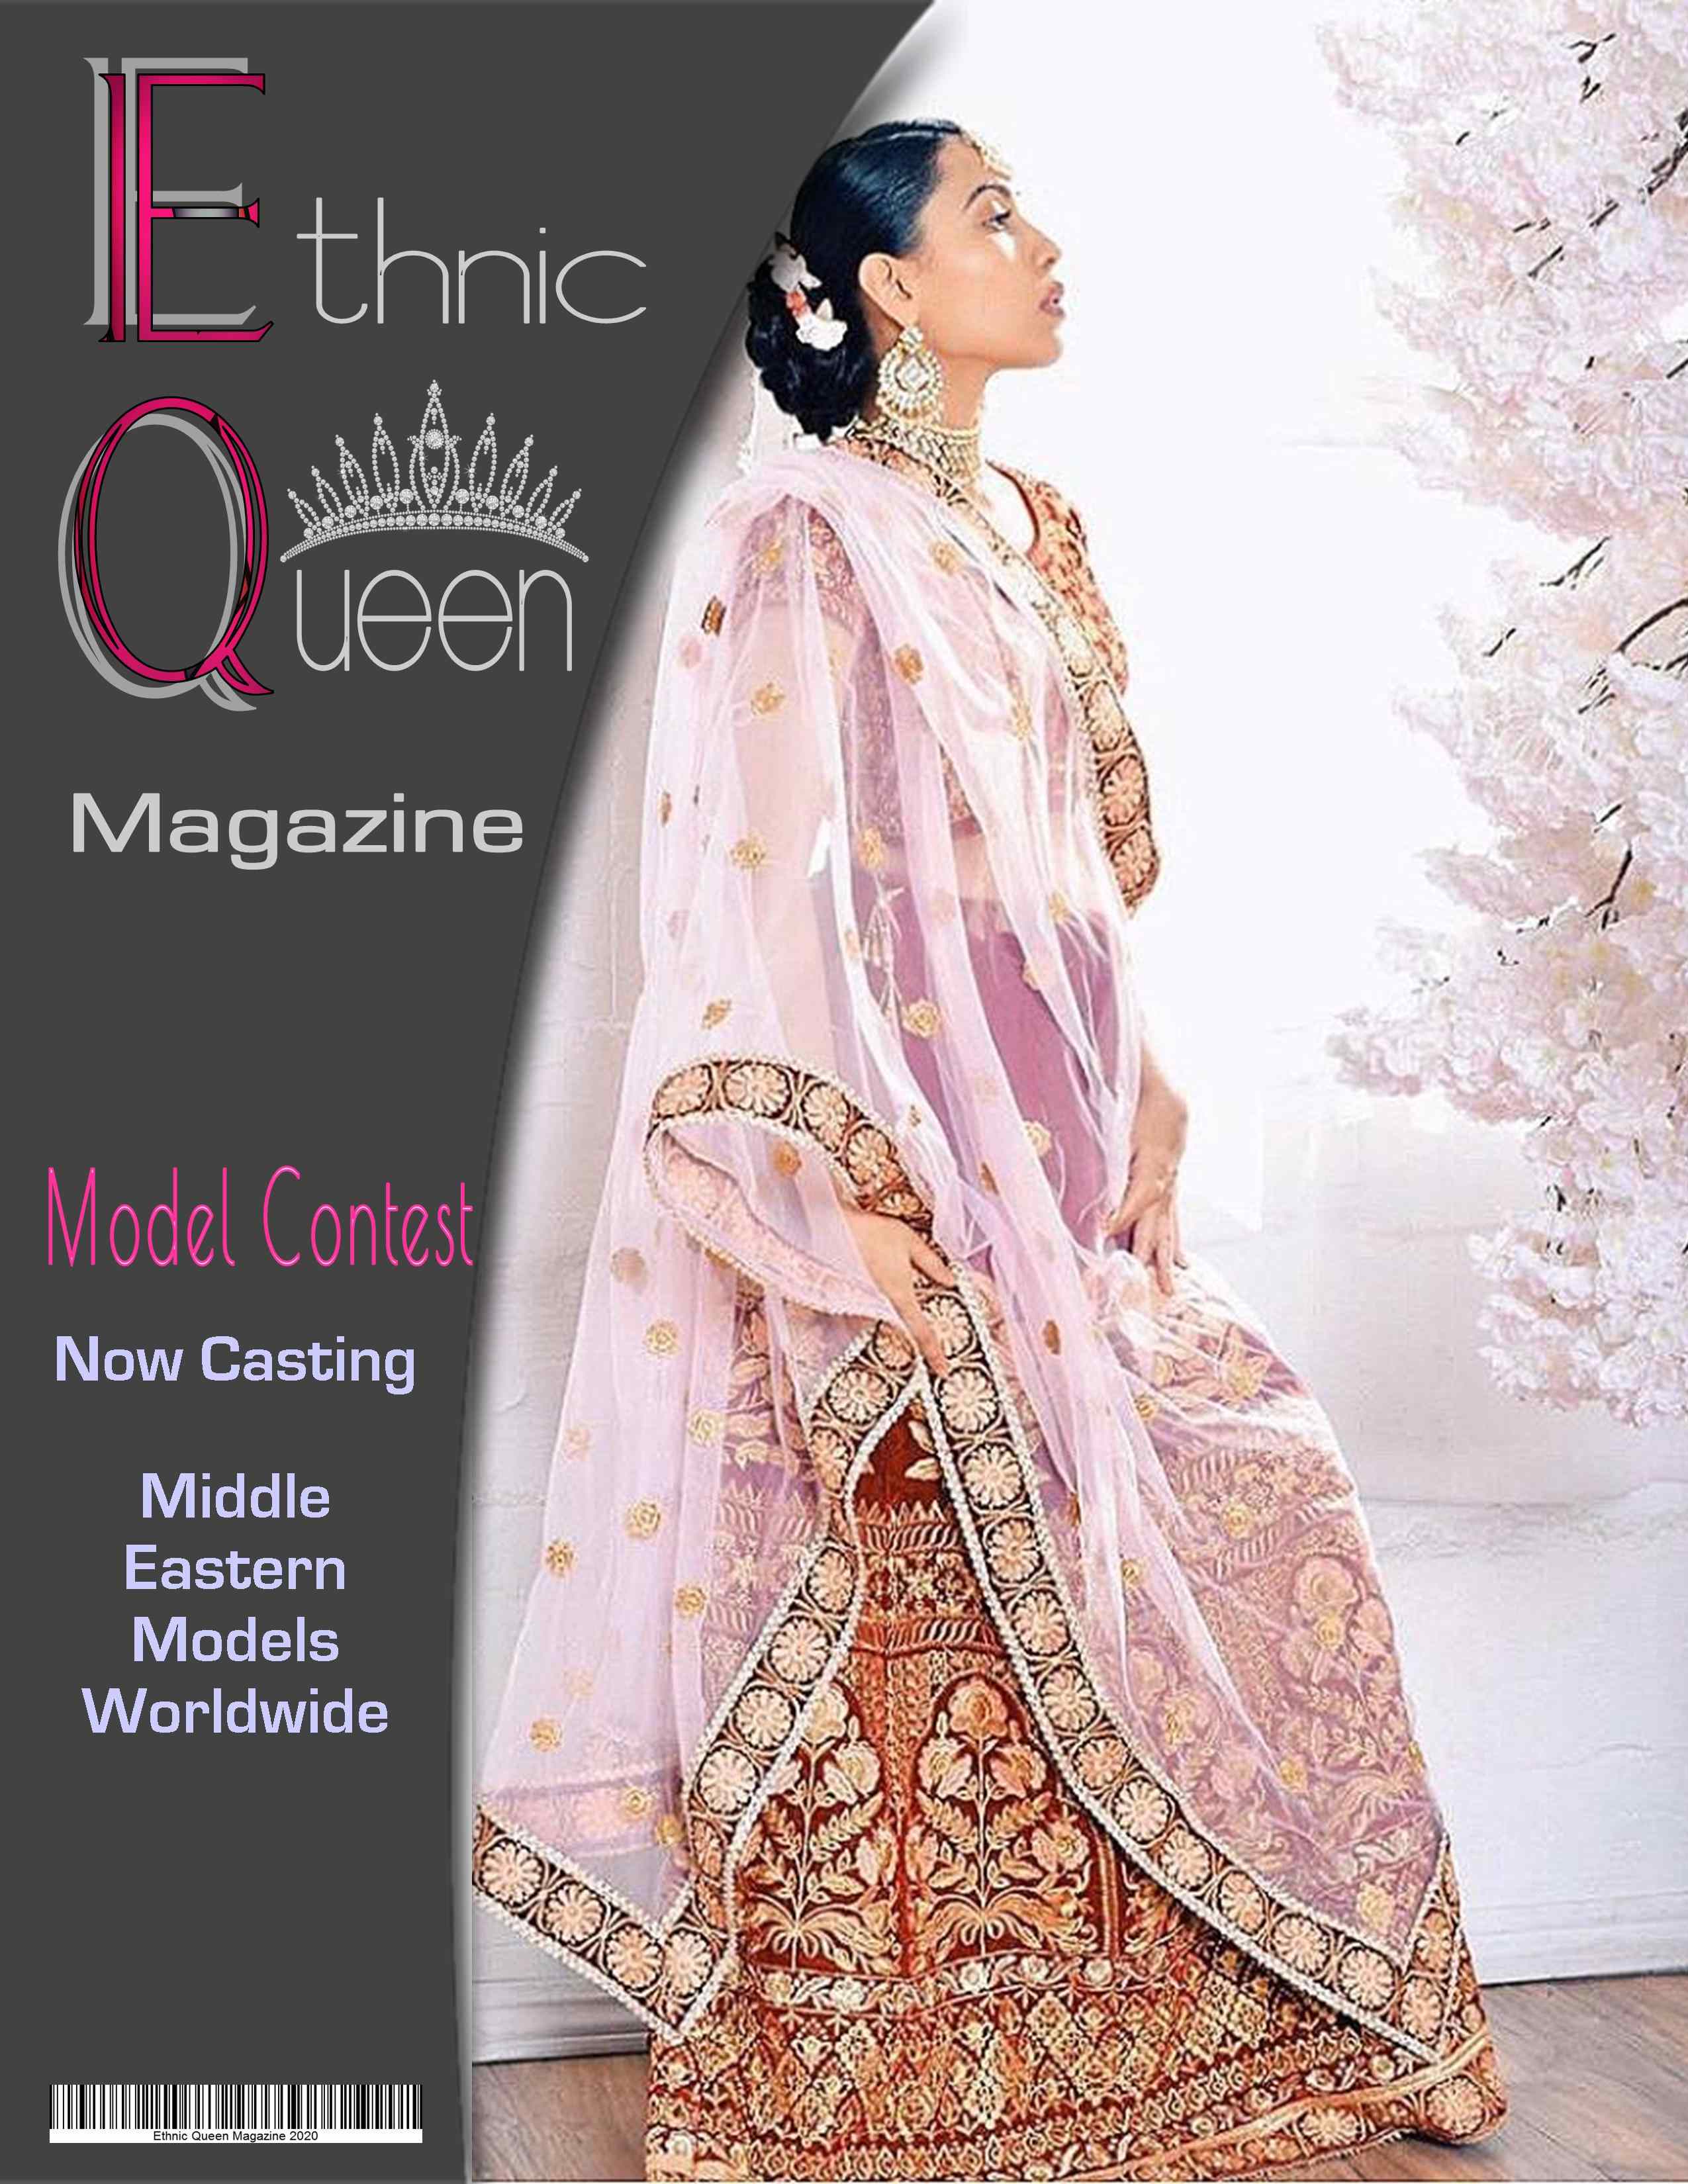 2020 Ethnic Queen Magazine  Middle Eastern Cover Model Contest Online, Dubai, United Arab Emirates